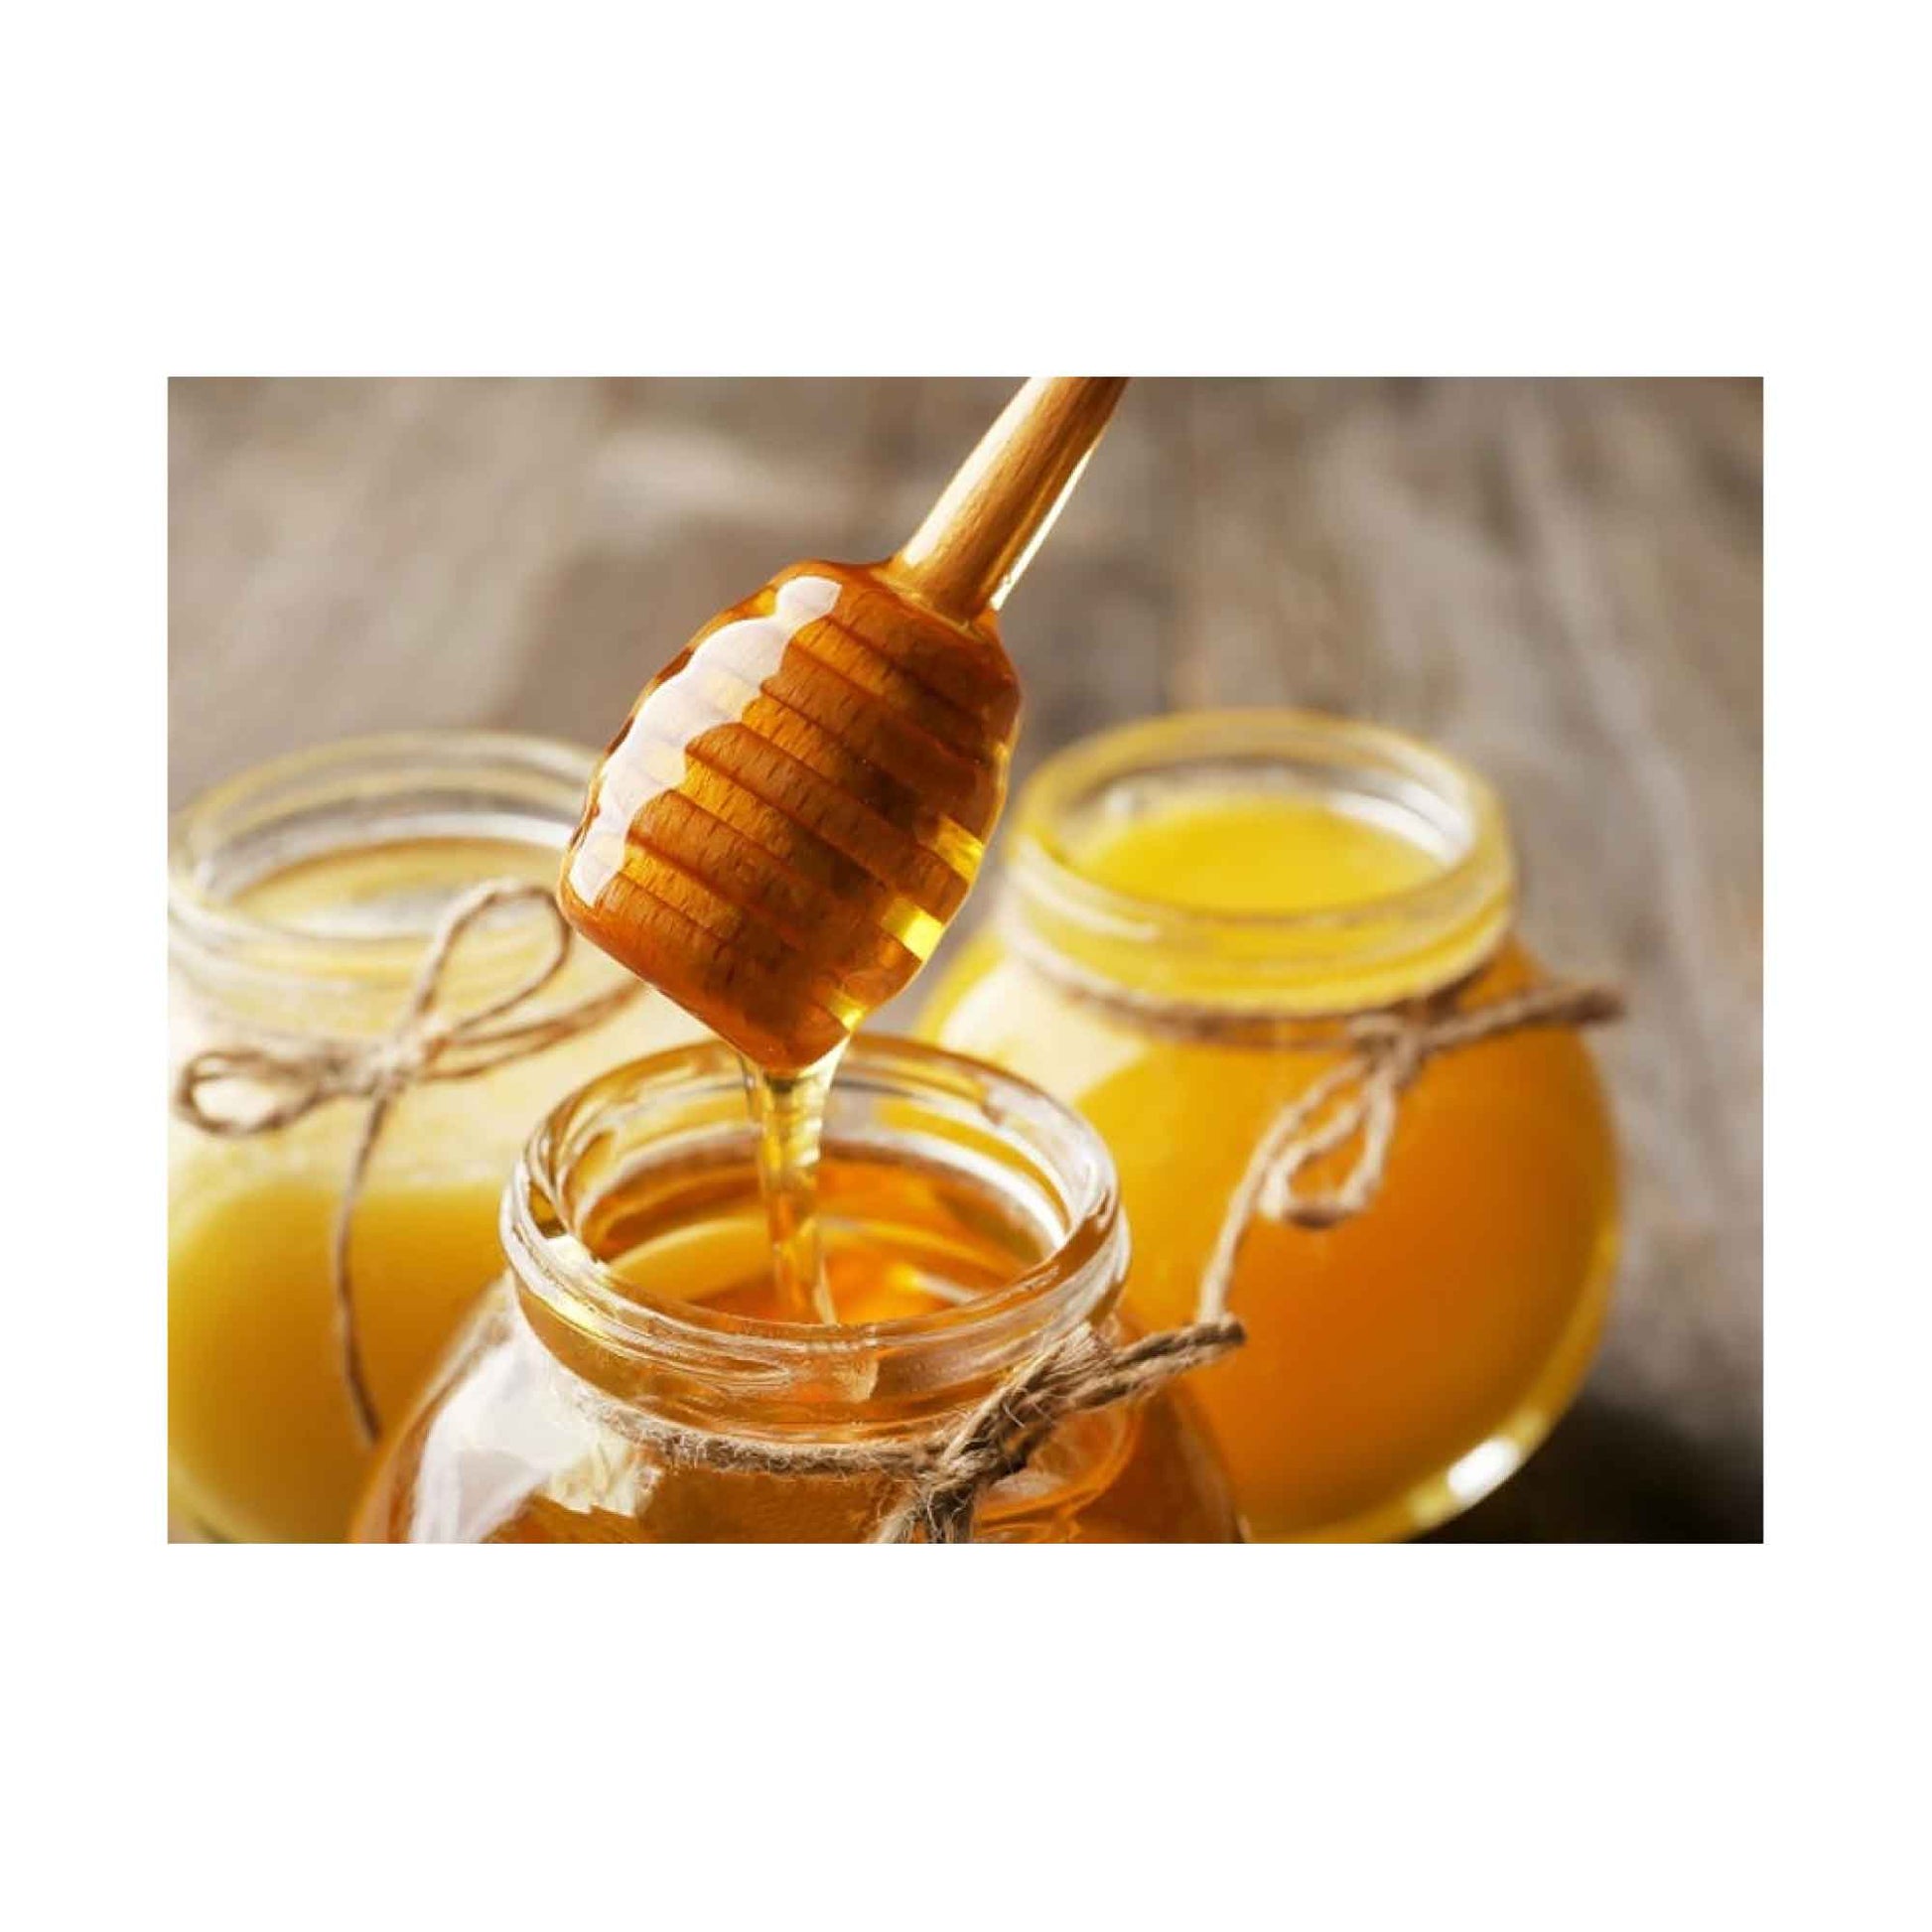 10x 100g Plant Oil Soap Manuka Honey Scent Pure Vegetable Base Bar Australian